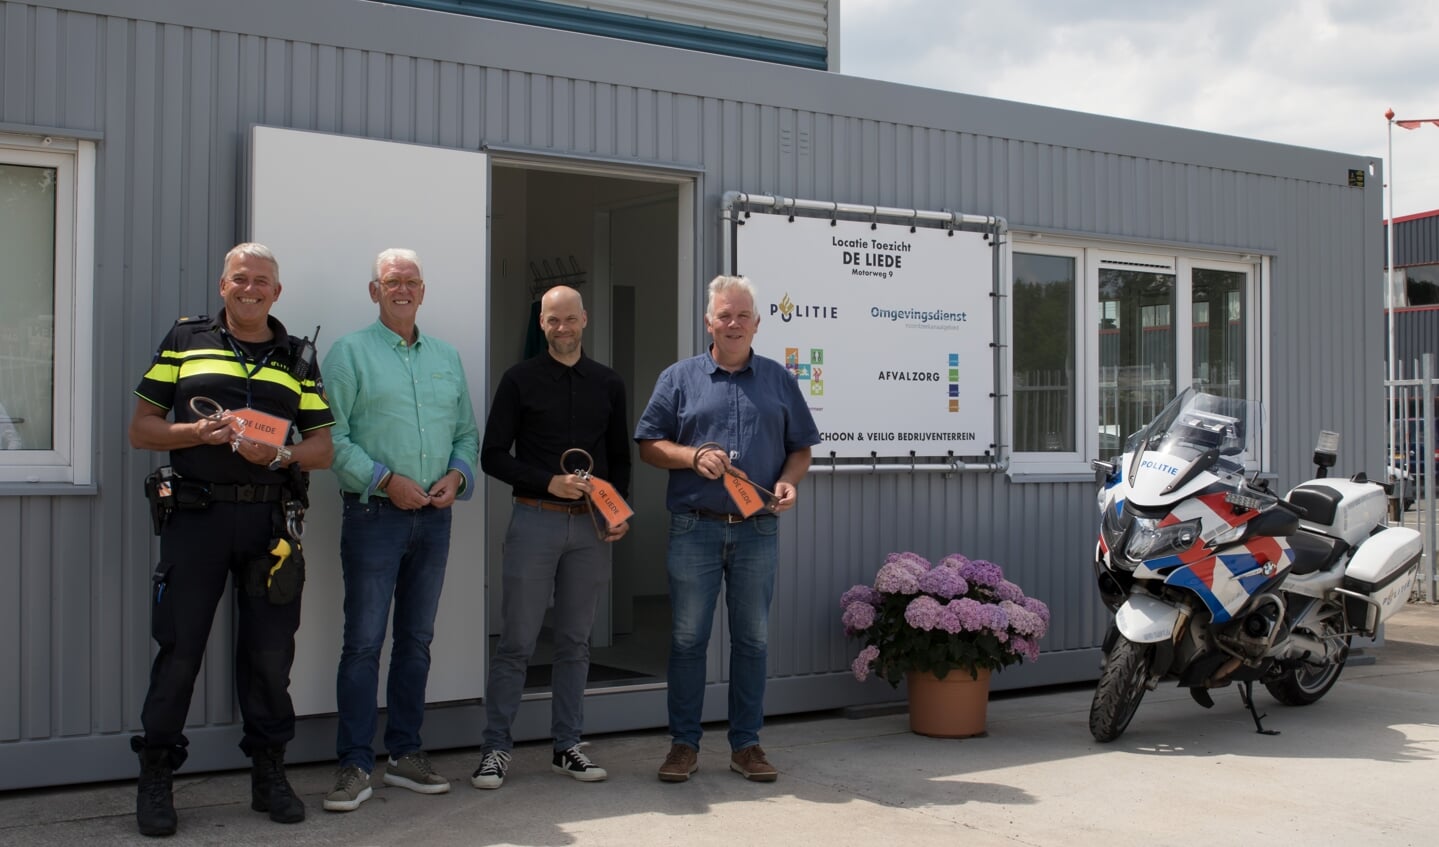 Van links af: John van der Hulst (politie), Johan Brugman (Parkmanagement), Tim Aarts (gemeente Haarlemmermeer), Henk Bossebroek van de Omgevingsdienst Noordzeekanaalgebied)